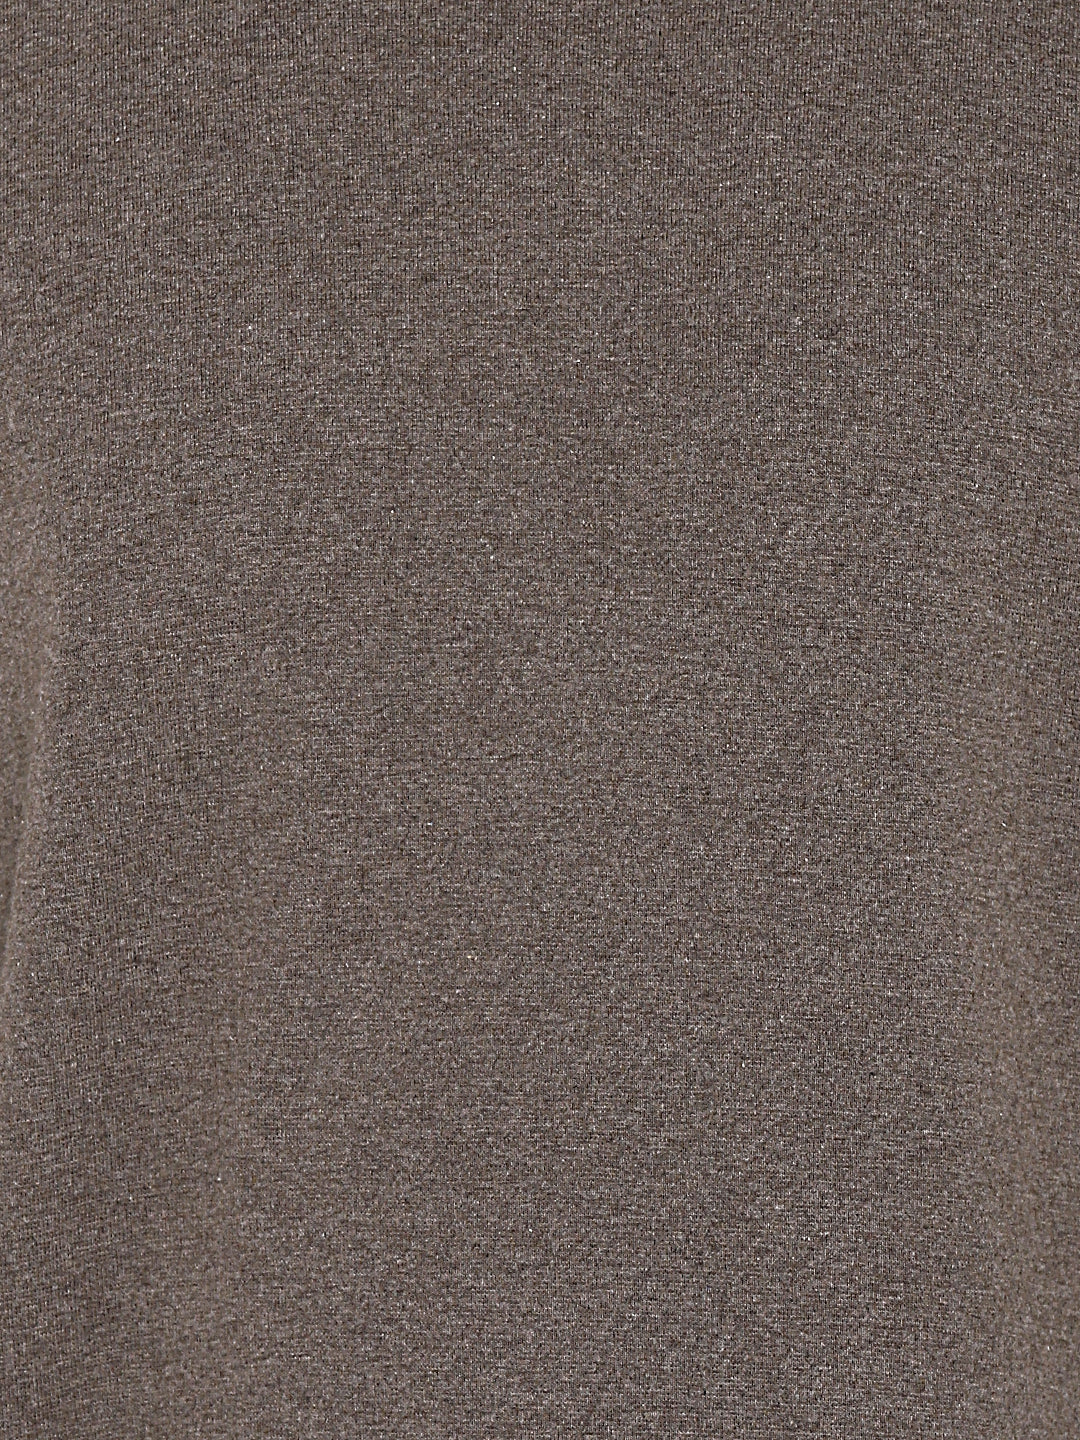 Extra Thick Winter Round Neck Cotton T-Shirt For Men - Brown Melange